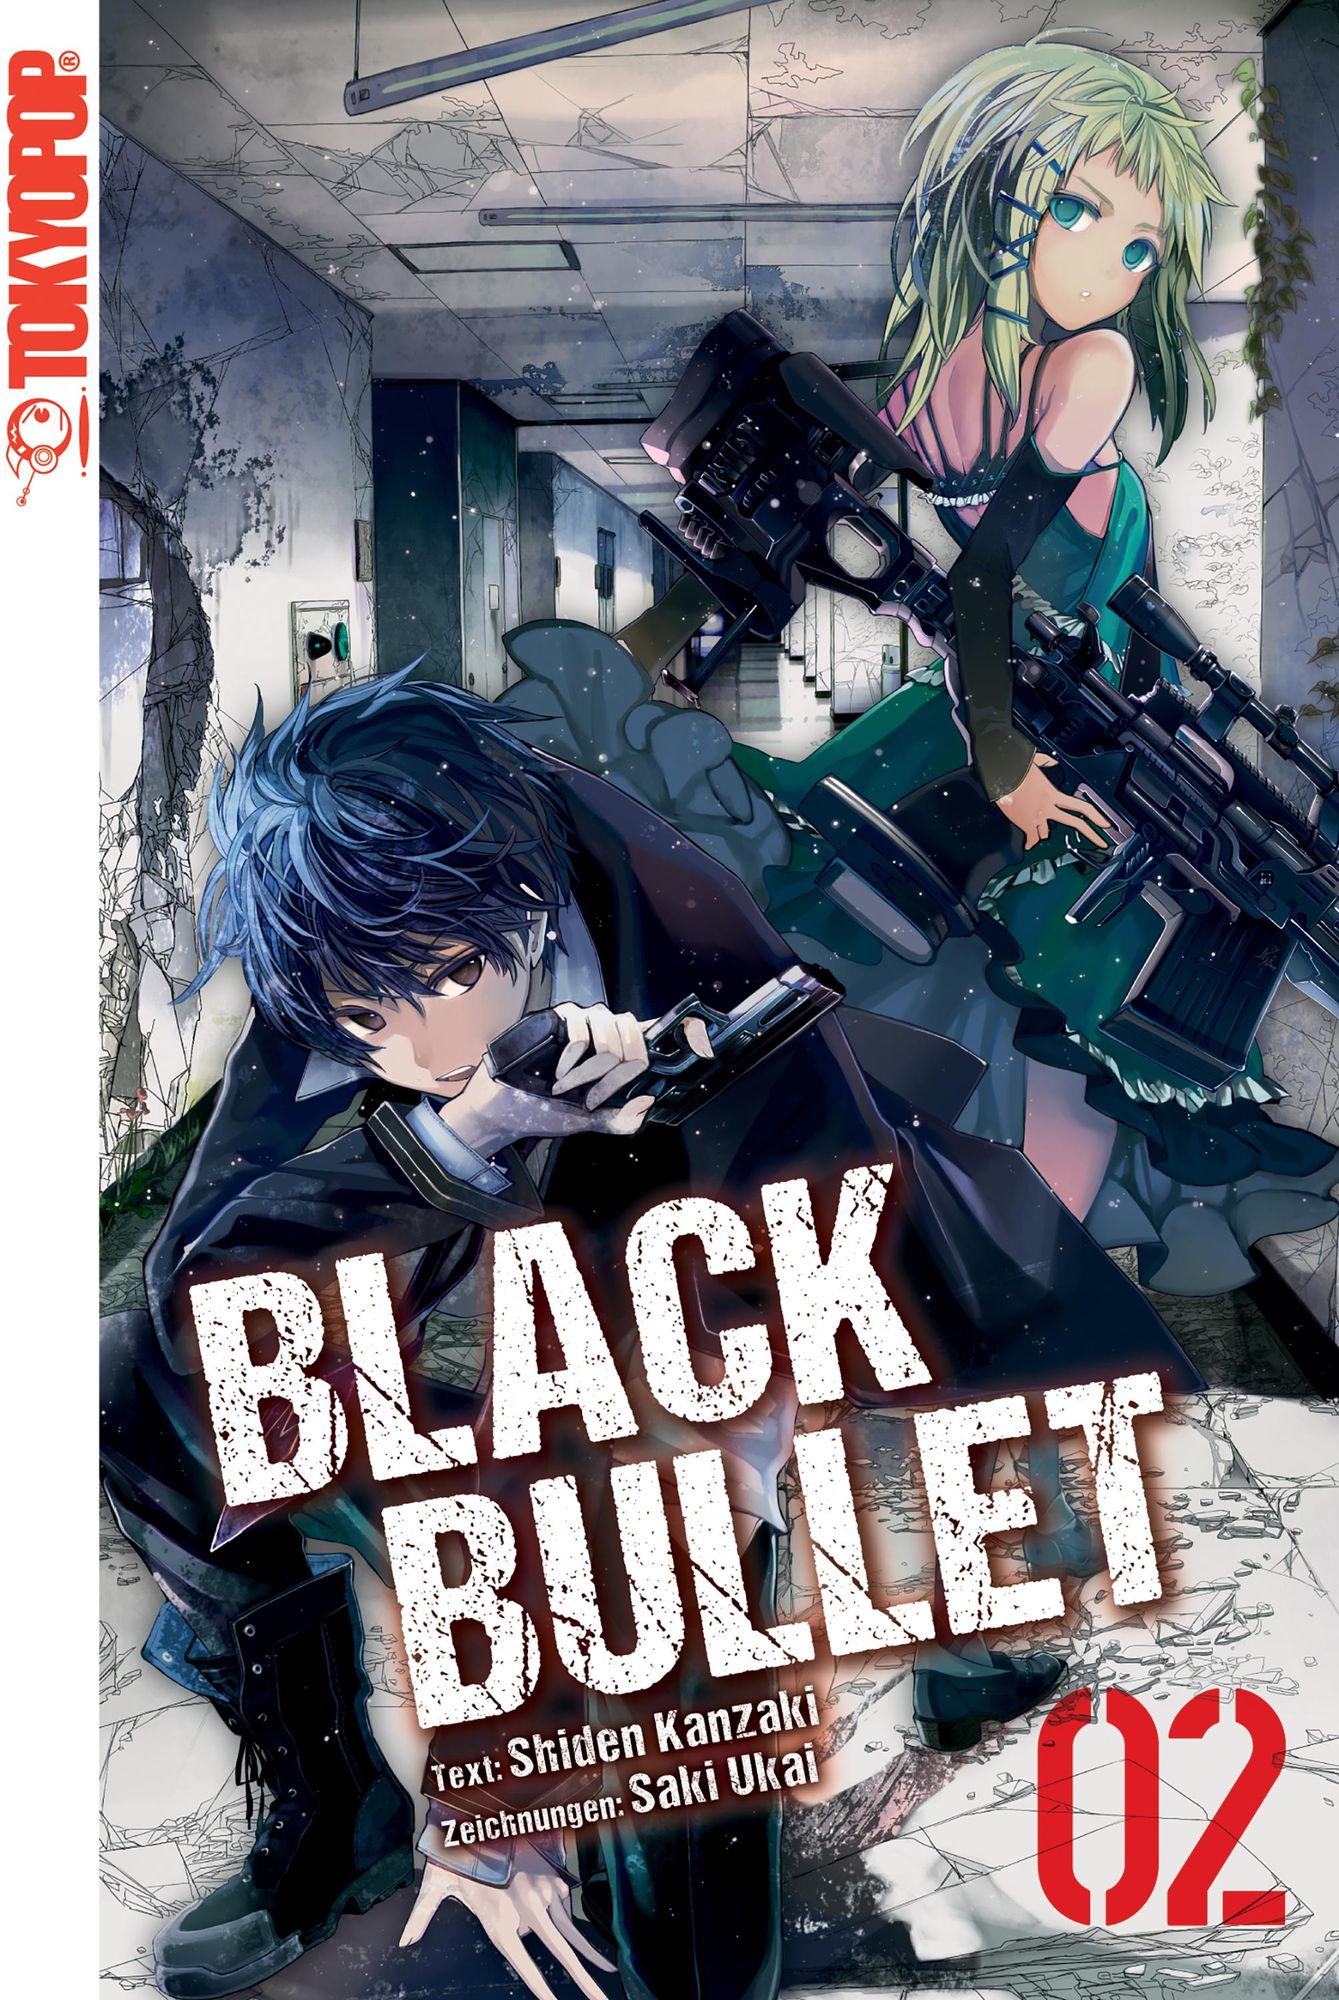 Black Bullet – Light Novel, Band 5 Manga eBook by Saki Ukai - EPUB Book